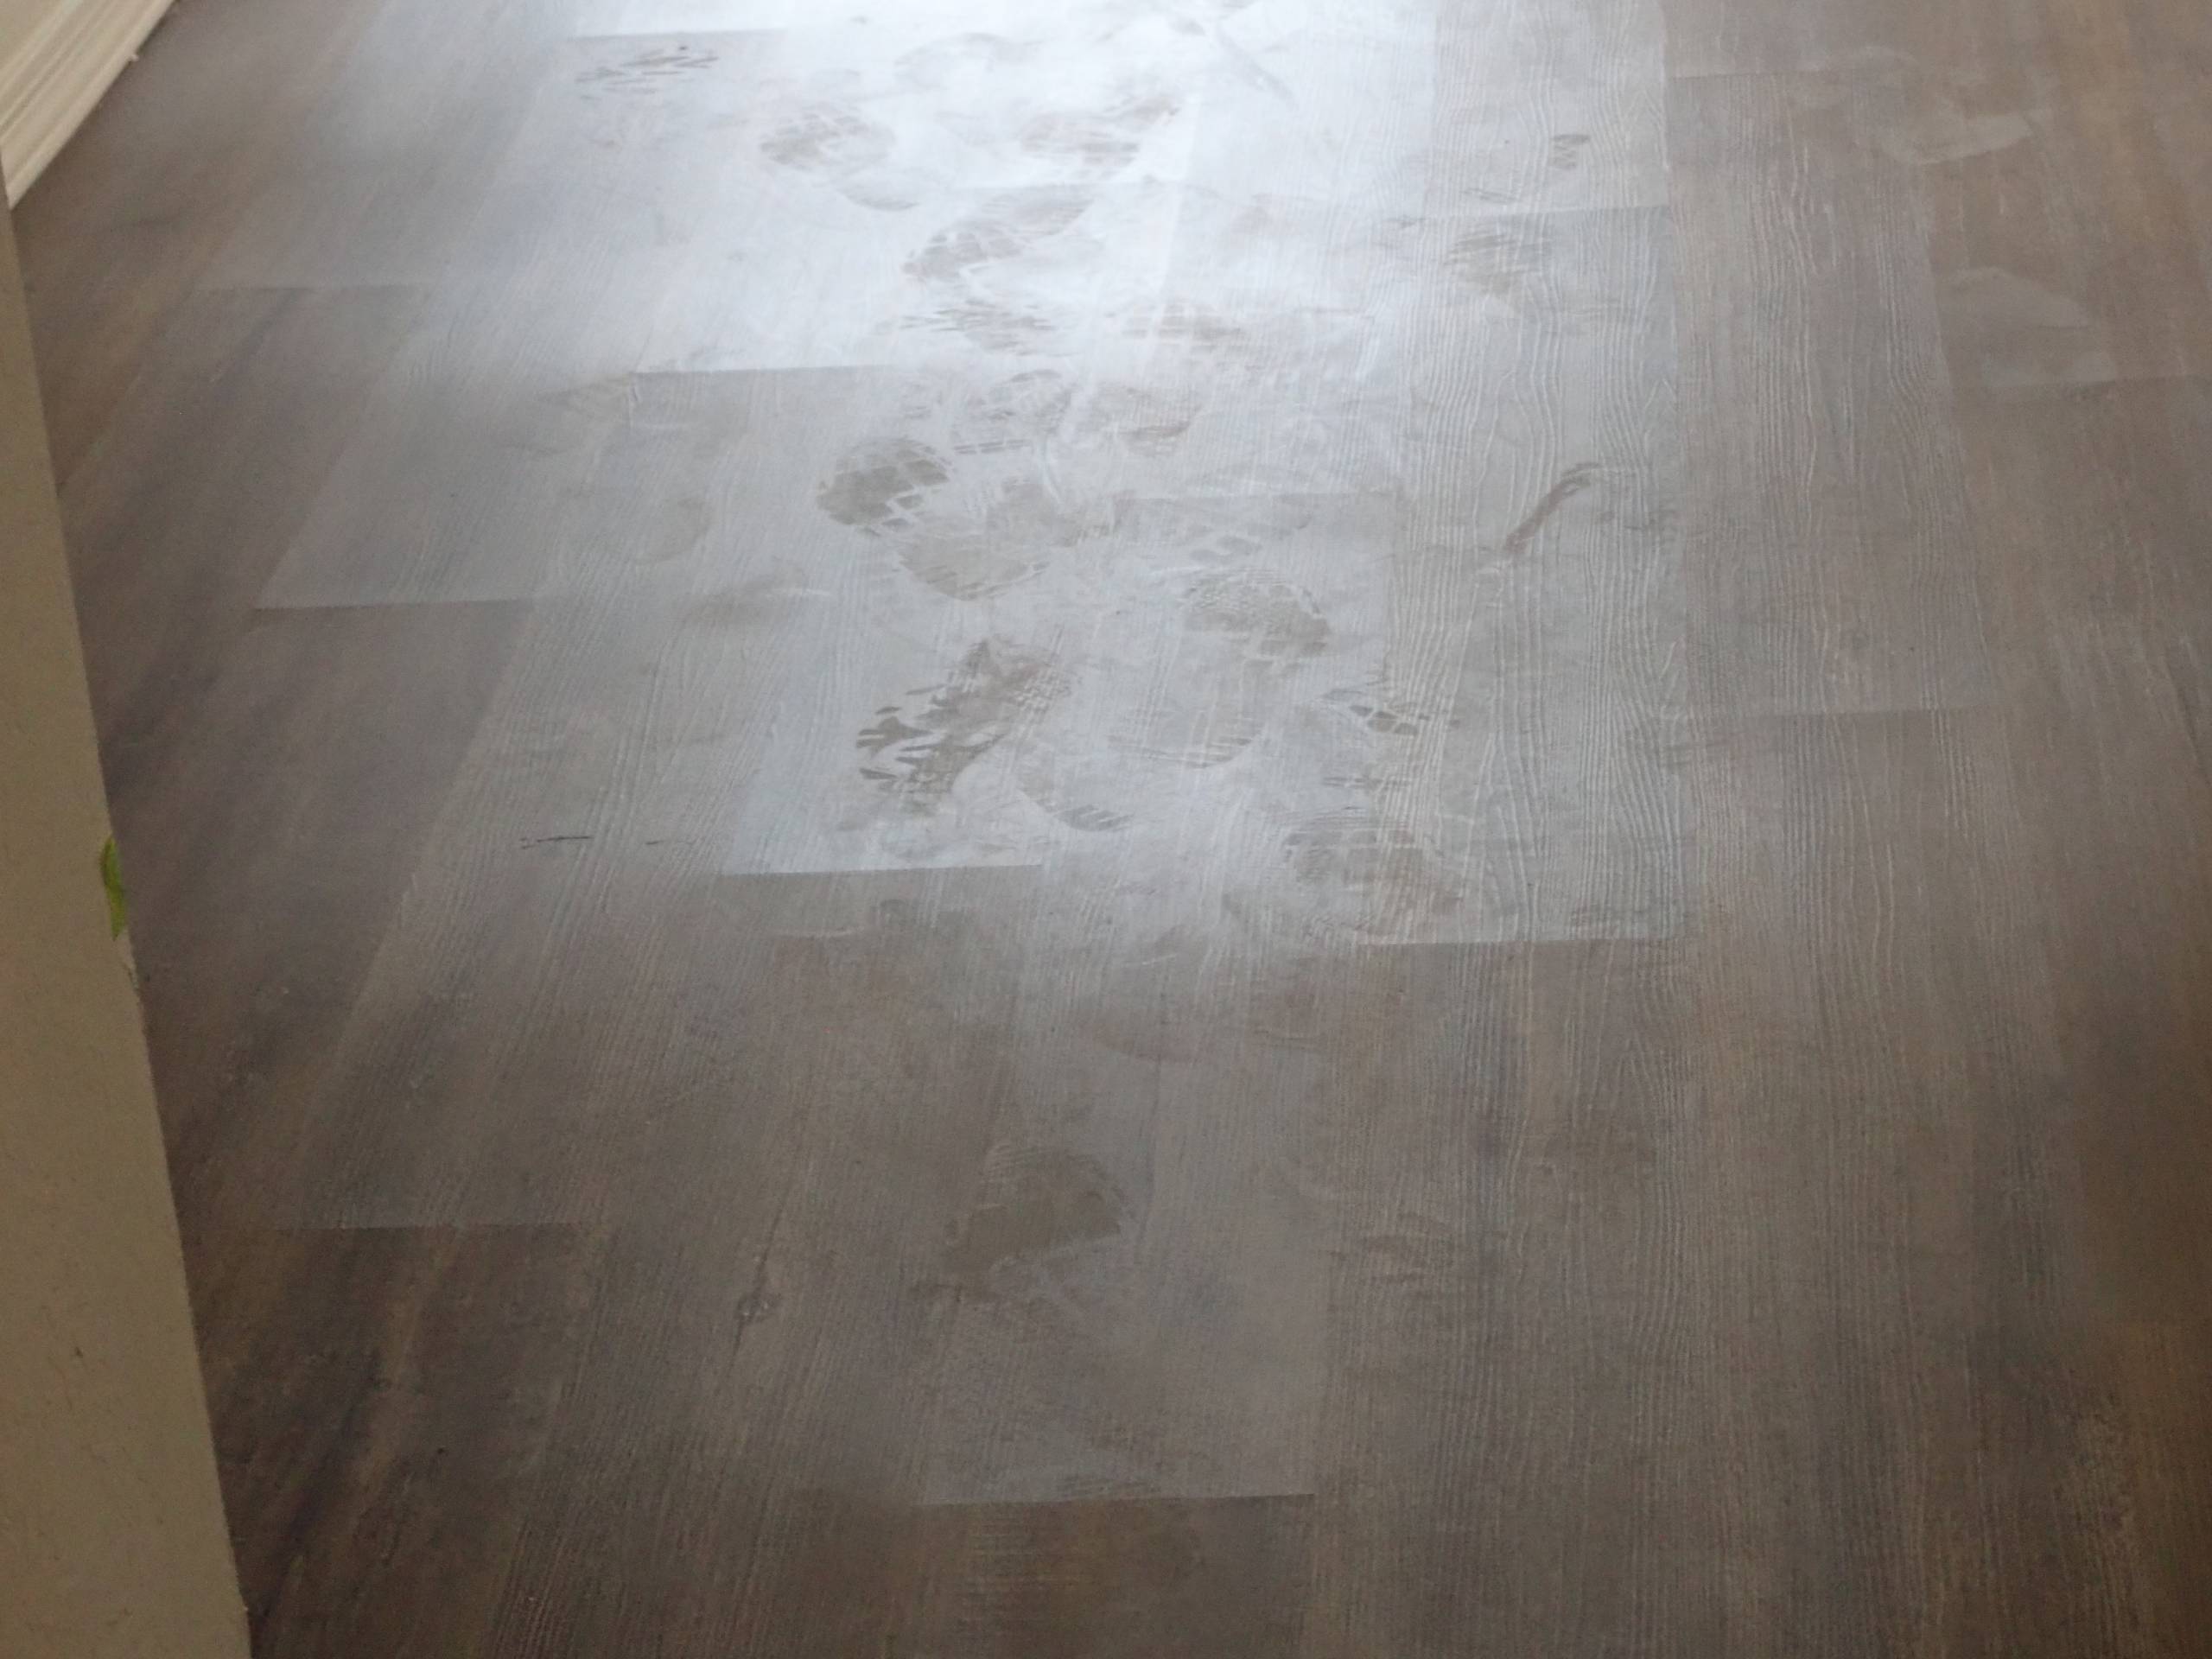 Buckling Problem in Laminate Floor | Flooring Inspection Services